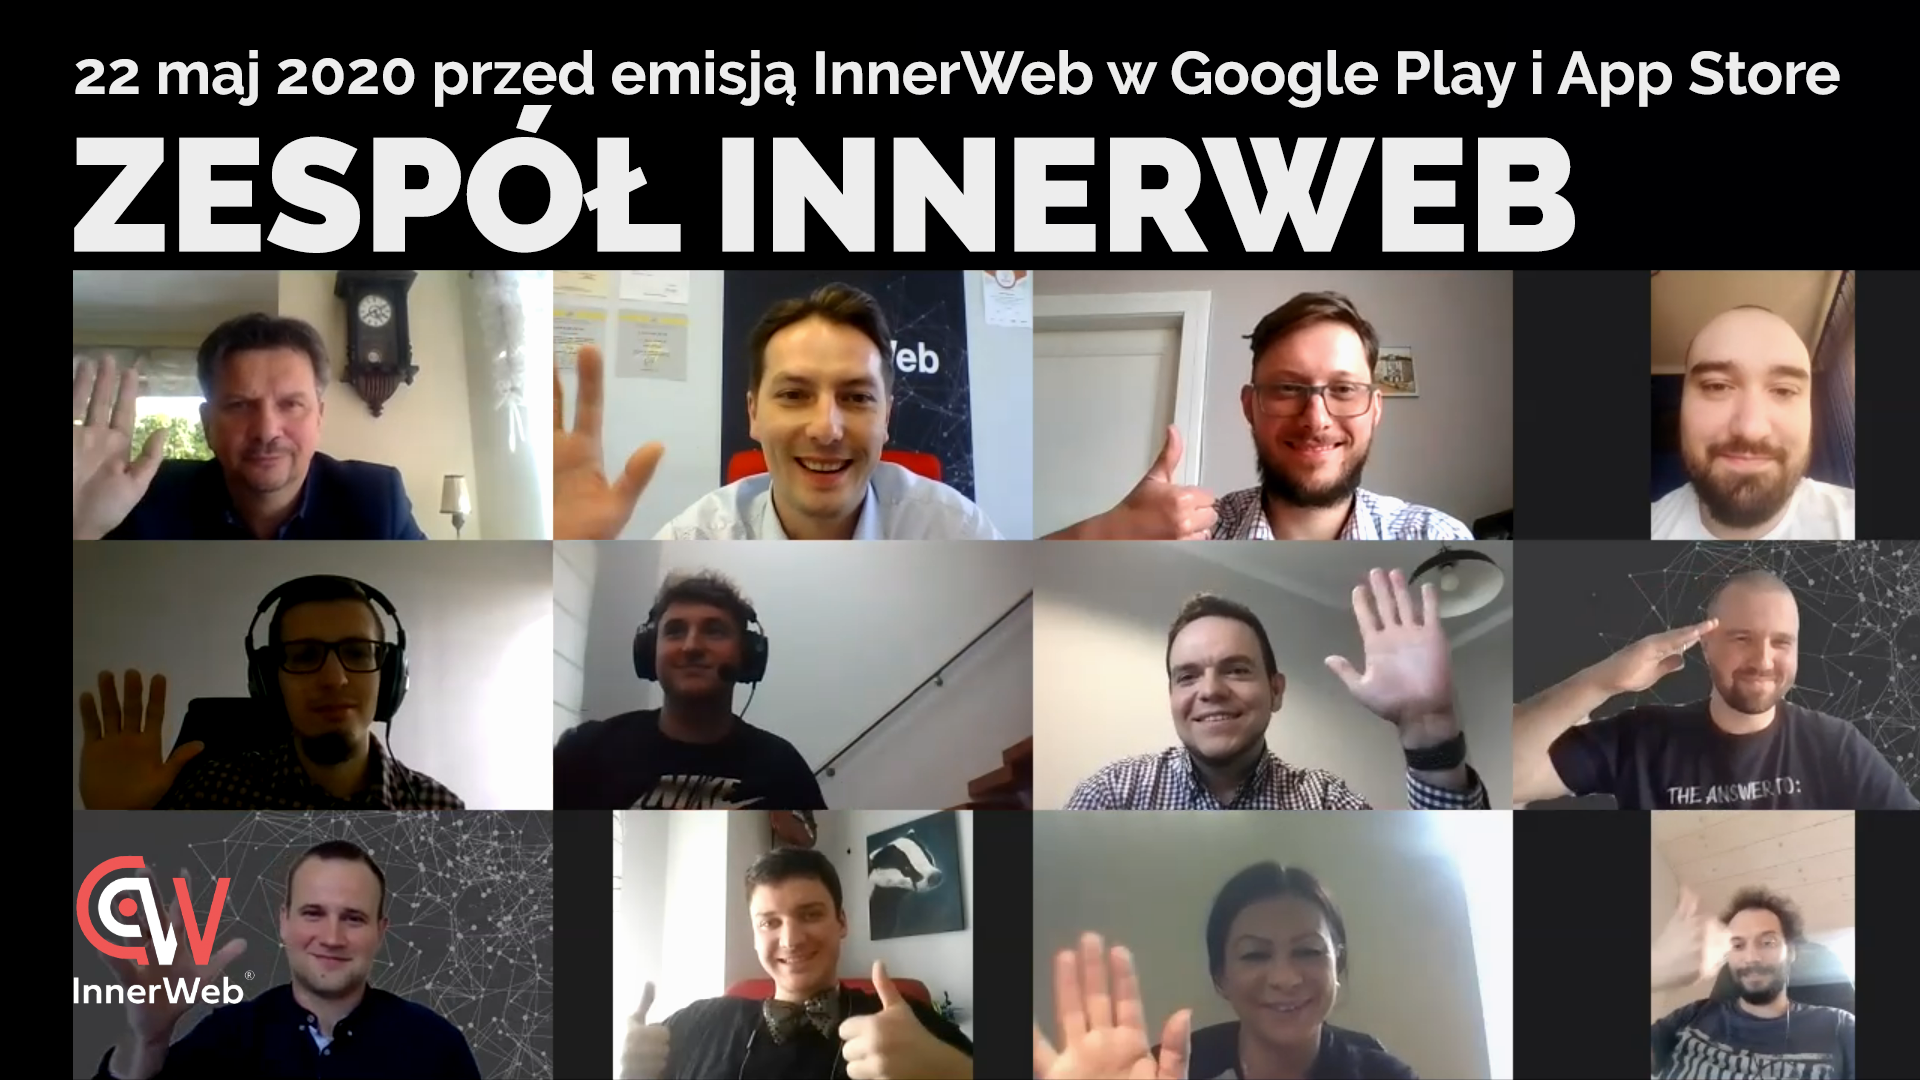 The InnerWeb development team